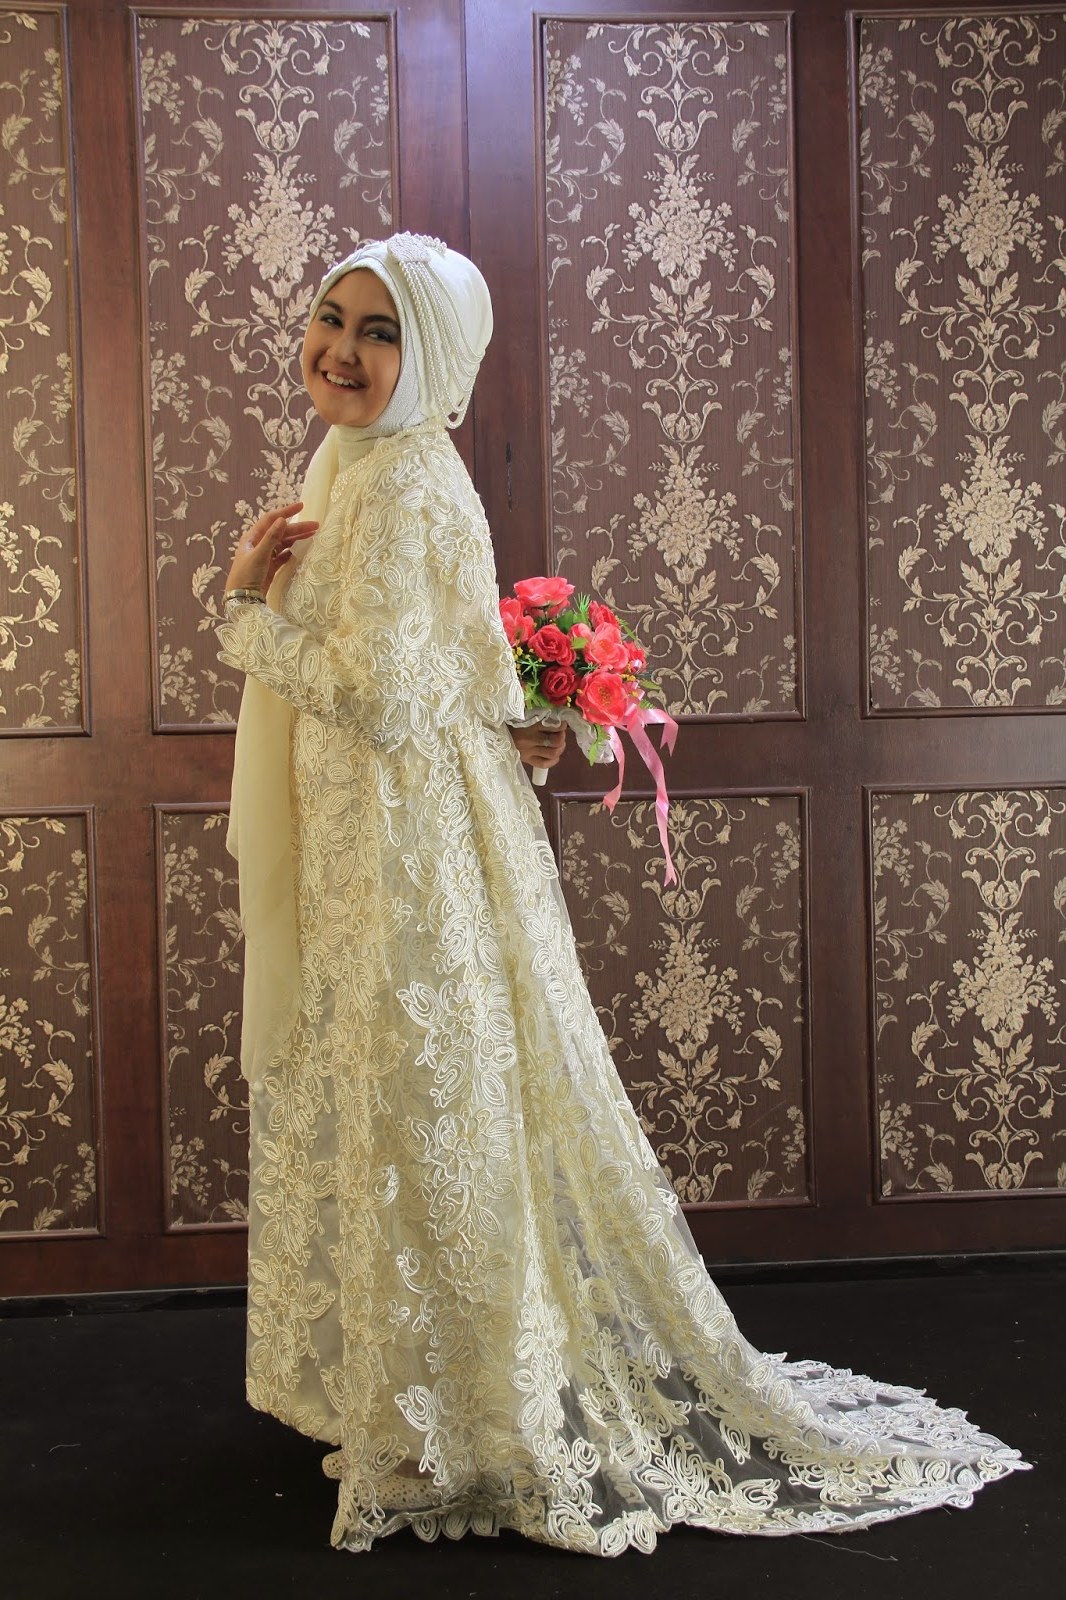 Model Gaun Muslimah Pengantin Wddj Padme Wedding Dress Confessions Of A Seamstress the